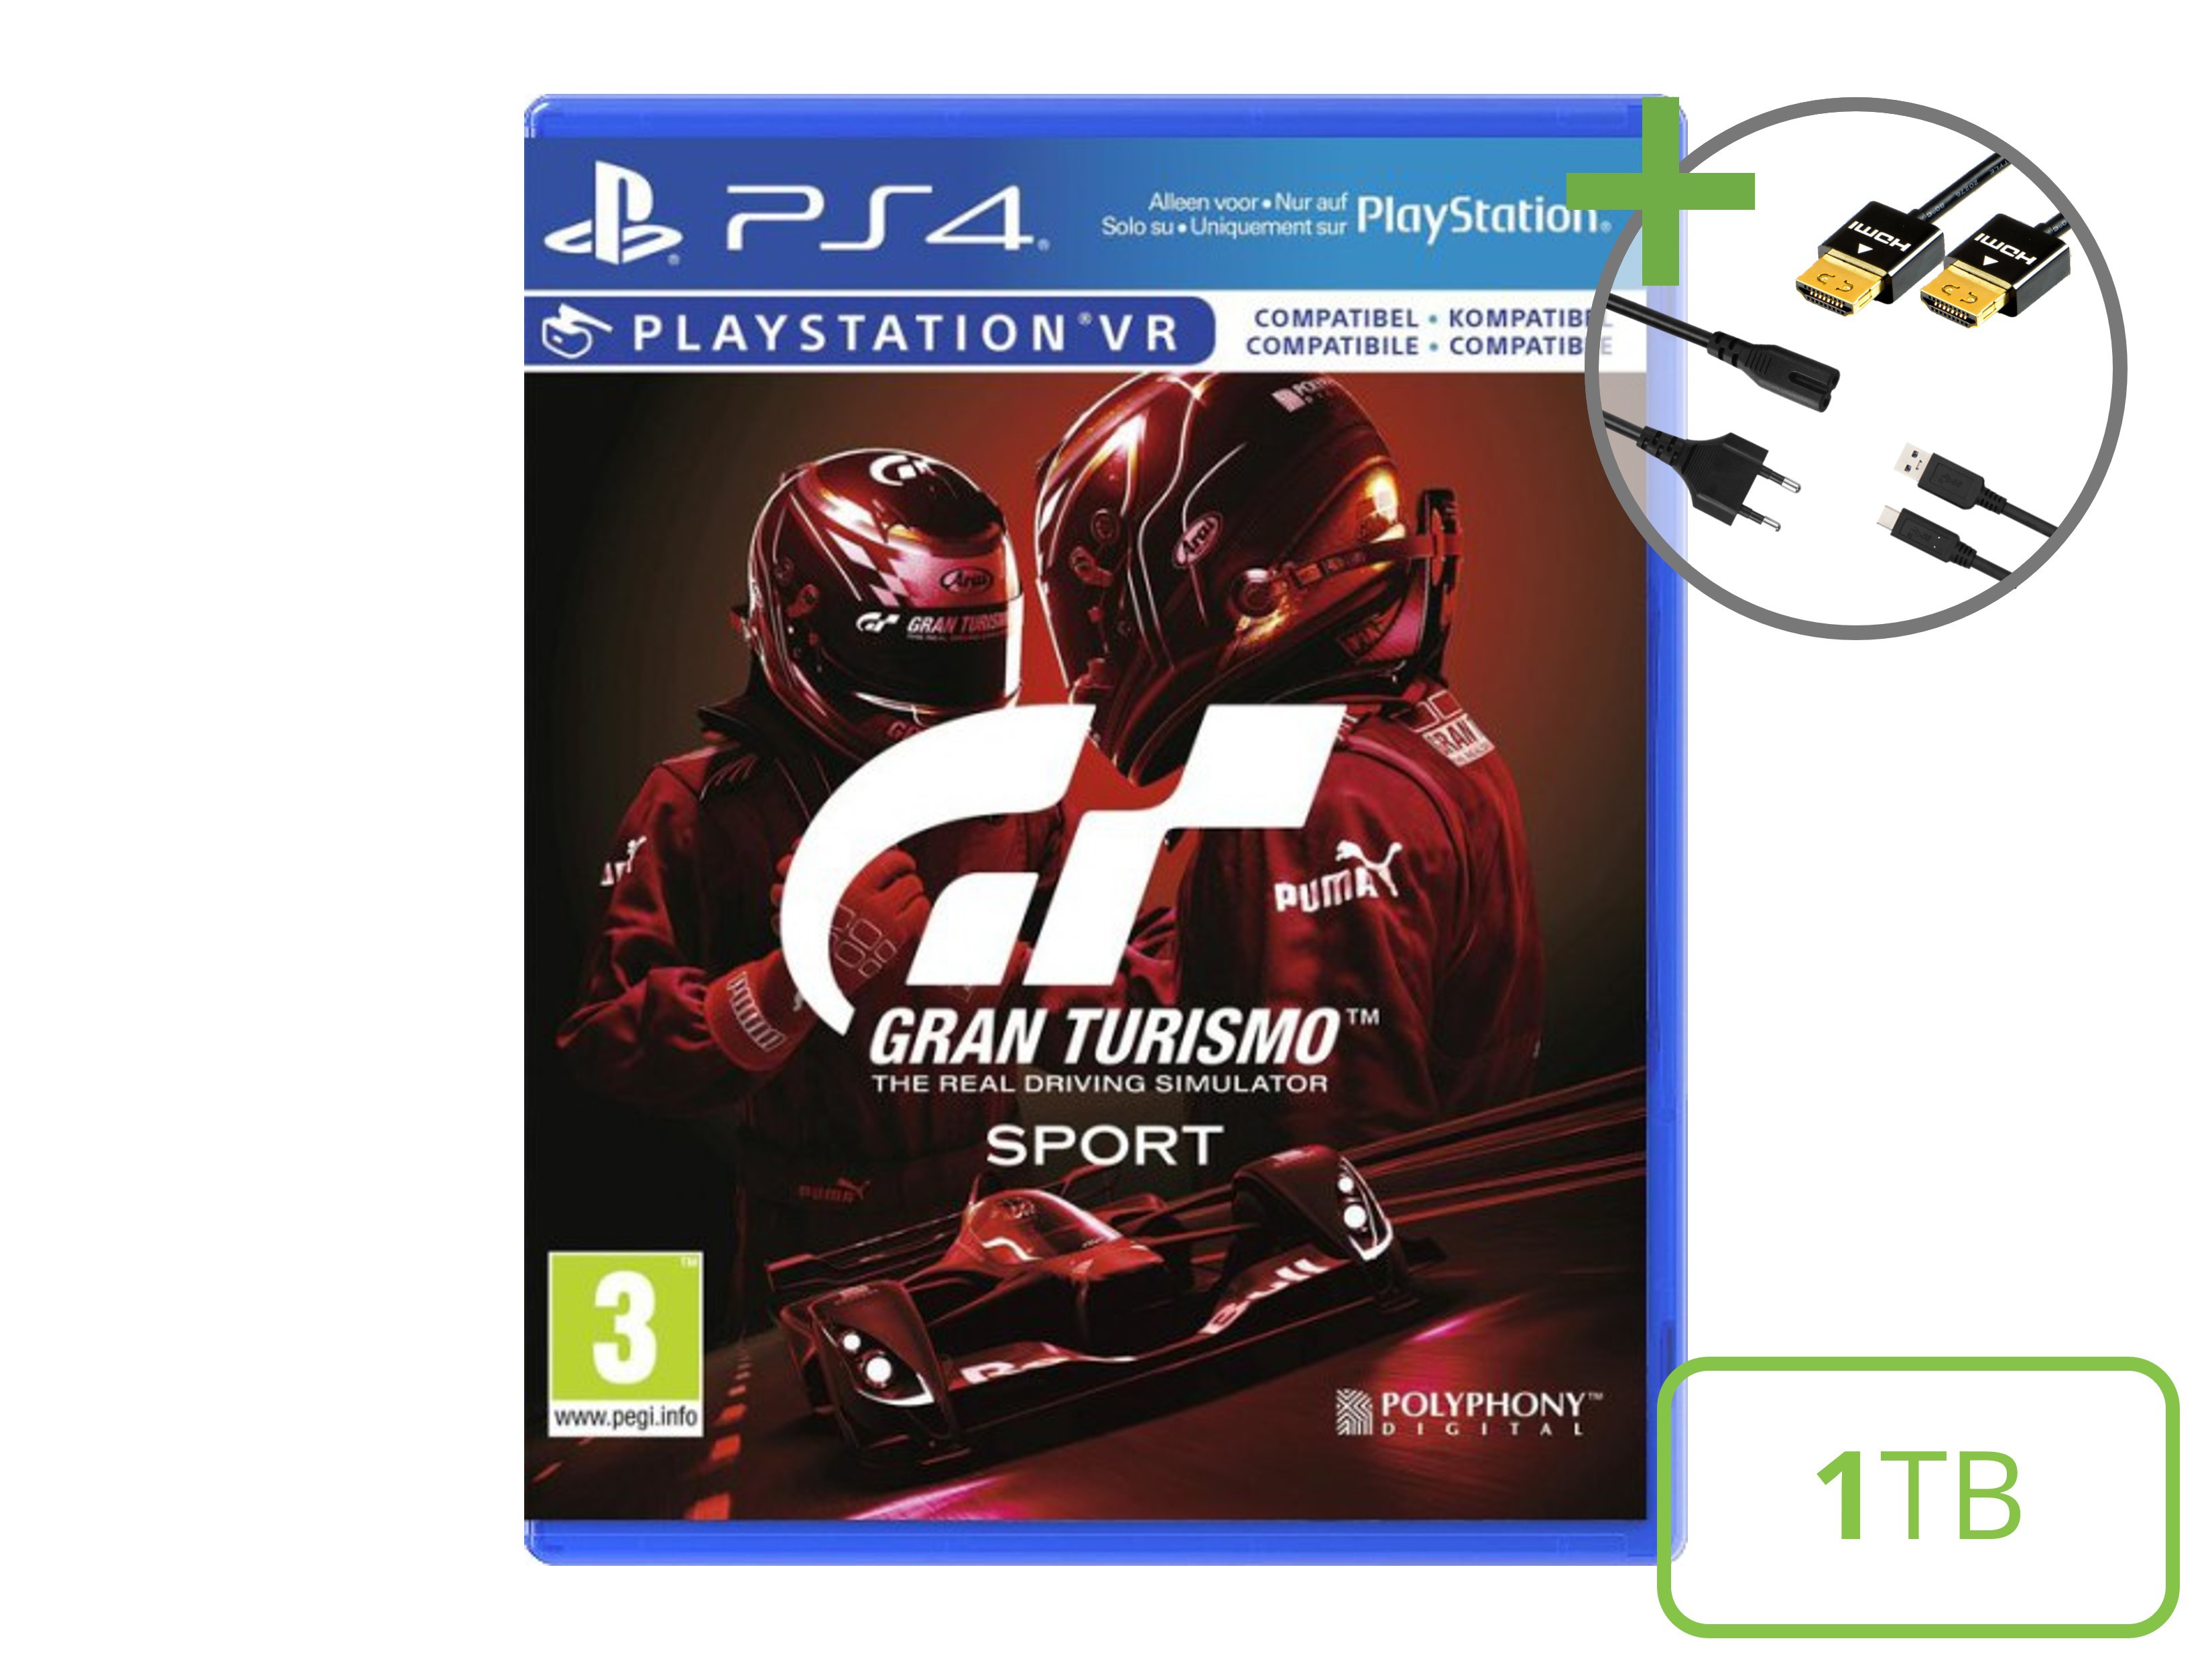 Sony PlayStation 4 Pro Starter Pack - 1TB Gran Turismo Sport Edition - Playstation 4 Hardware - 5